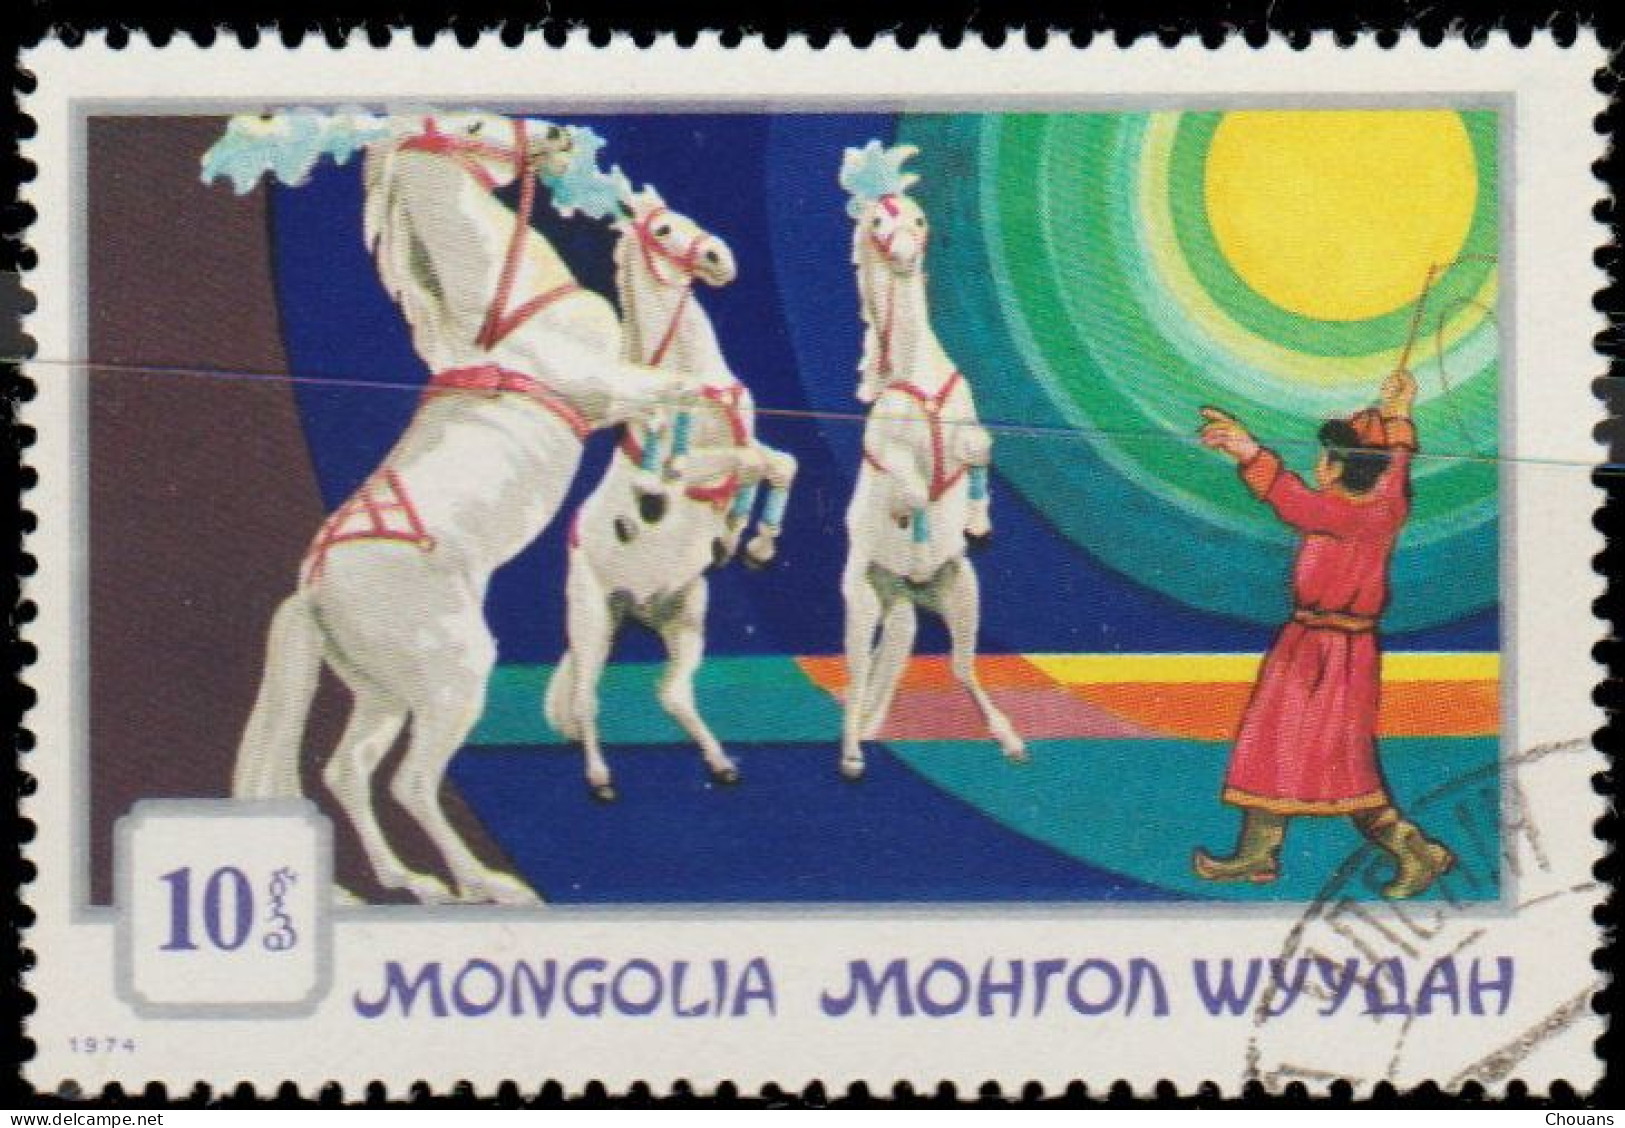 Mongolie 1974. ~ YT 711 - Cirque Mongol - Chevaux - Mongolia